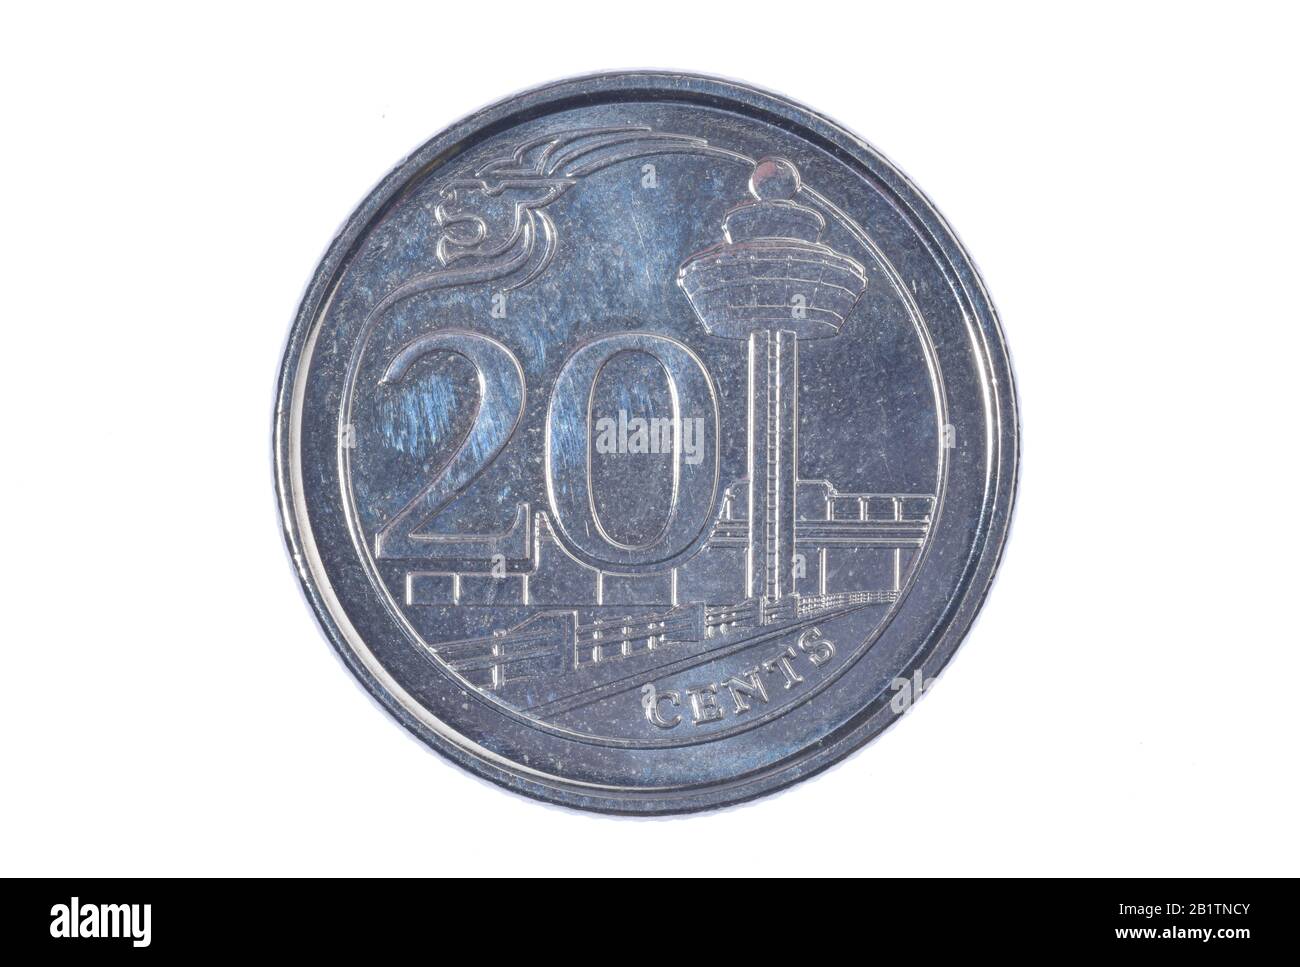 Geldmünze, 20 Centavos, Singapur Foto de stock